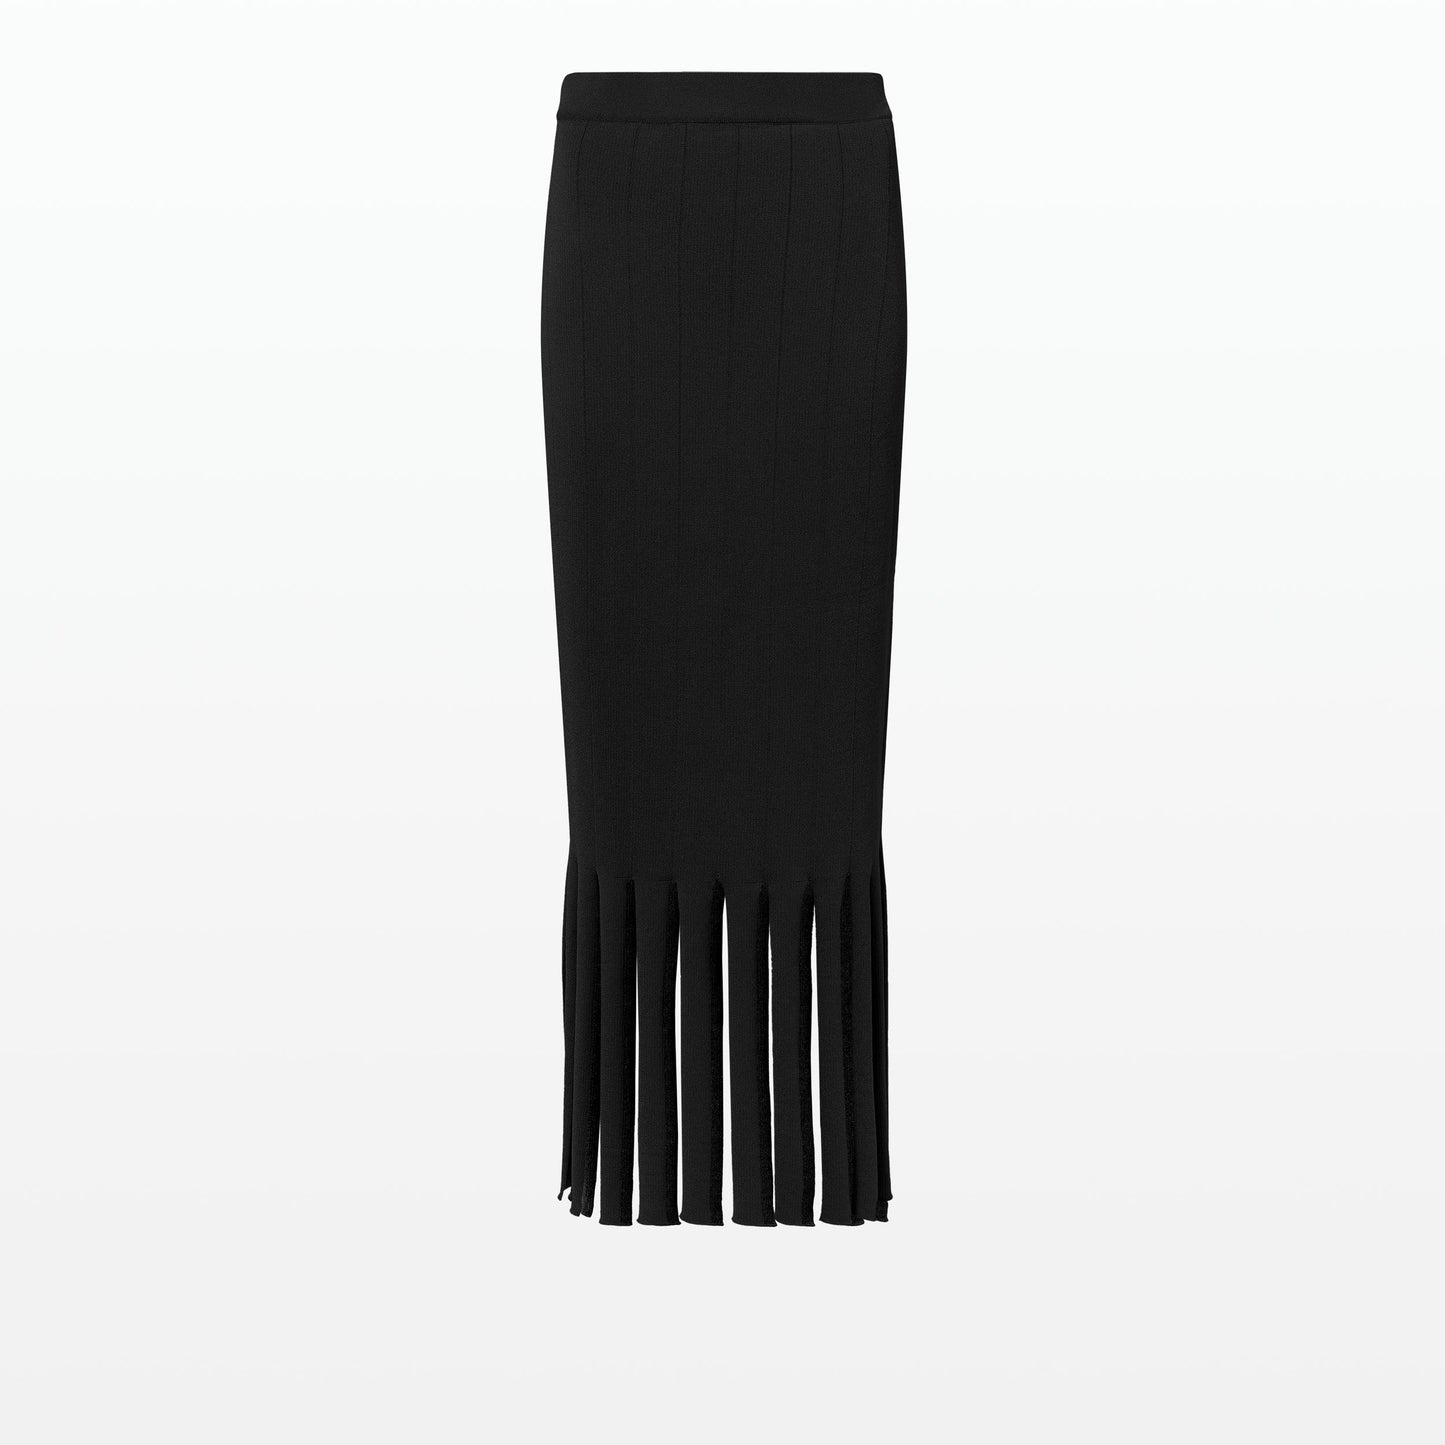 Khuno Black Knit Skirt